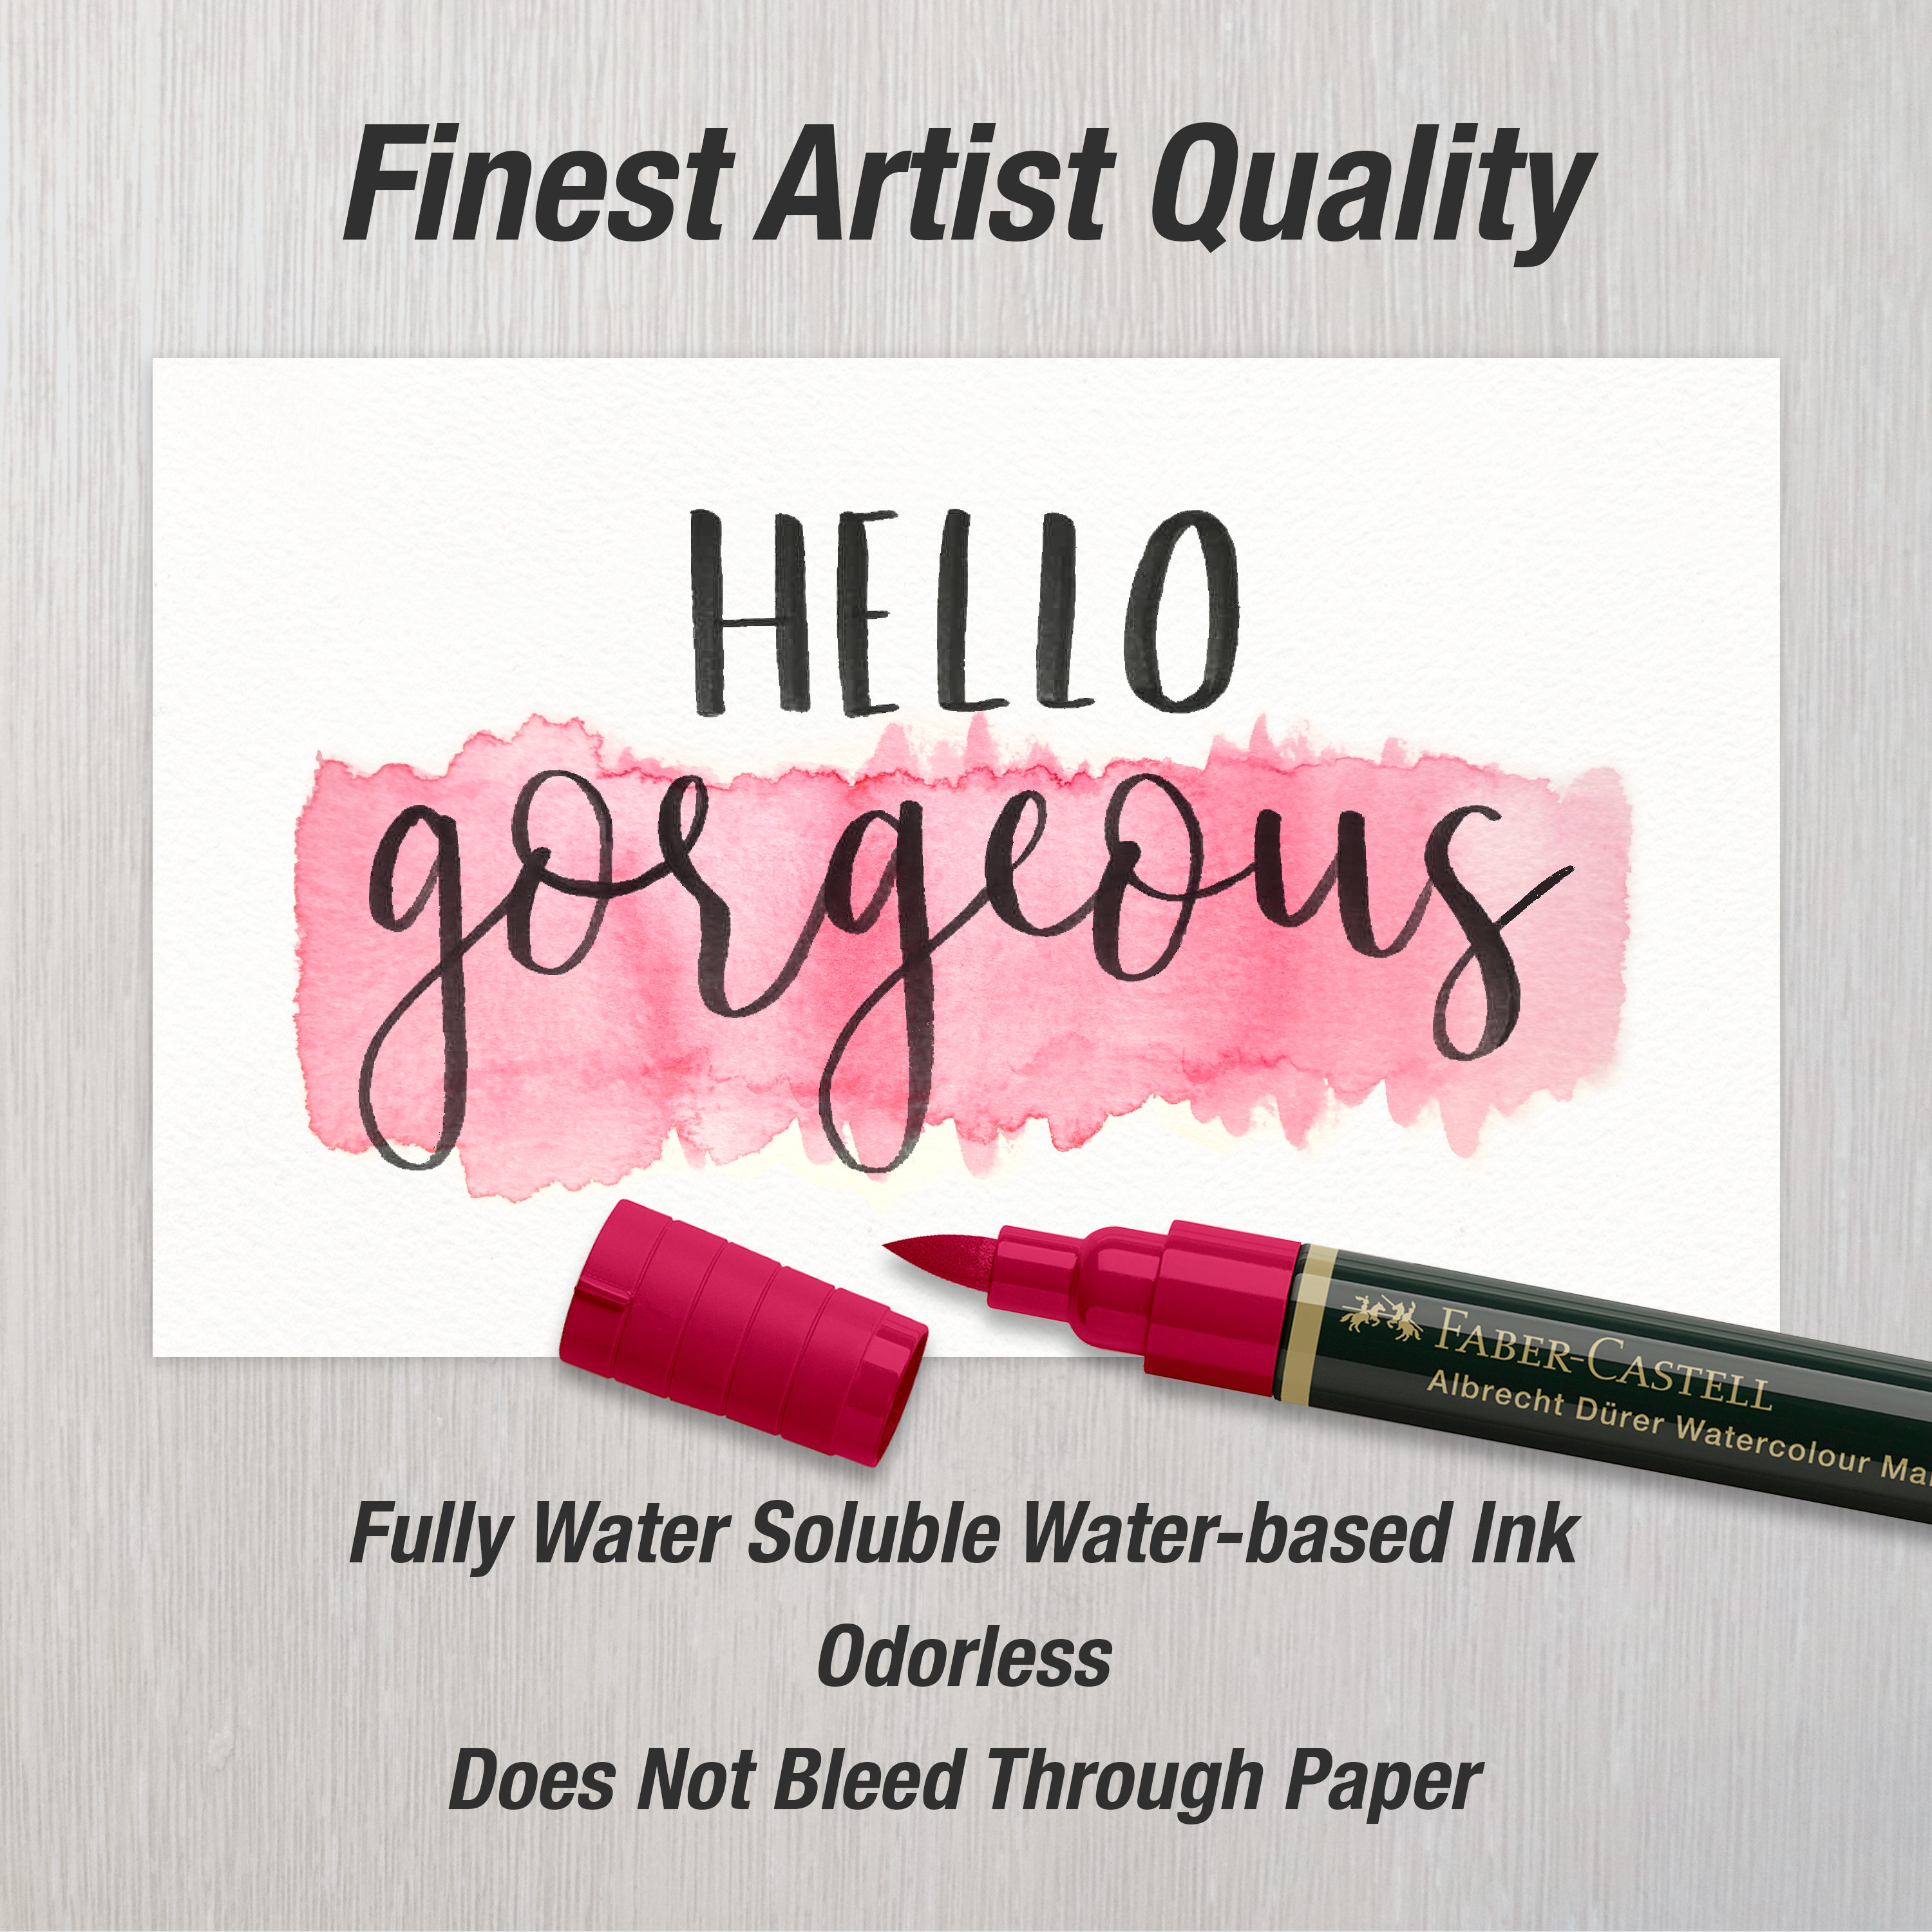 Faber-Castell Pitt Artist Pen Calligraphy Subtle Tones- Set Of 6